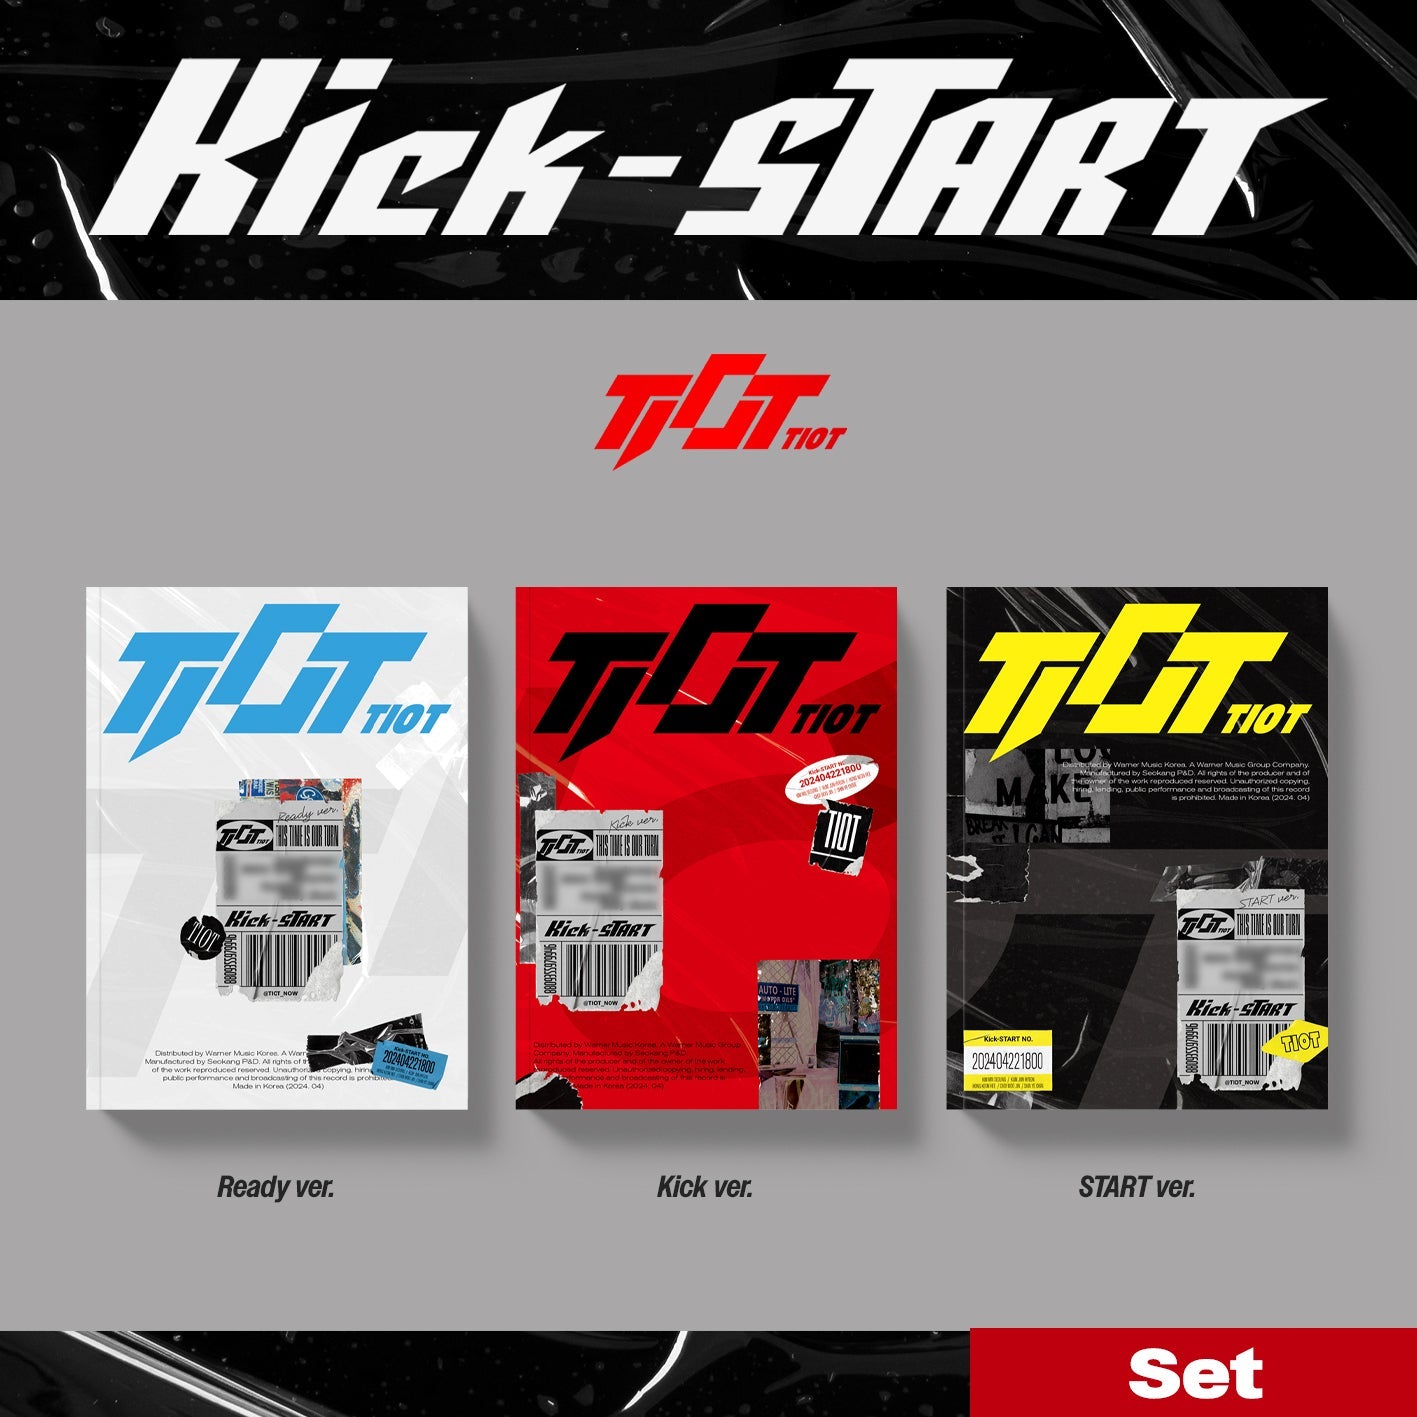 TIOT - [Kick-START] Kpop Album - Kpop Wholesale | Seoufly